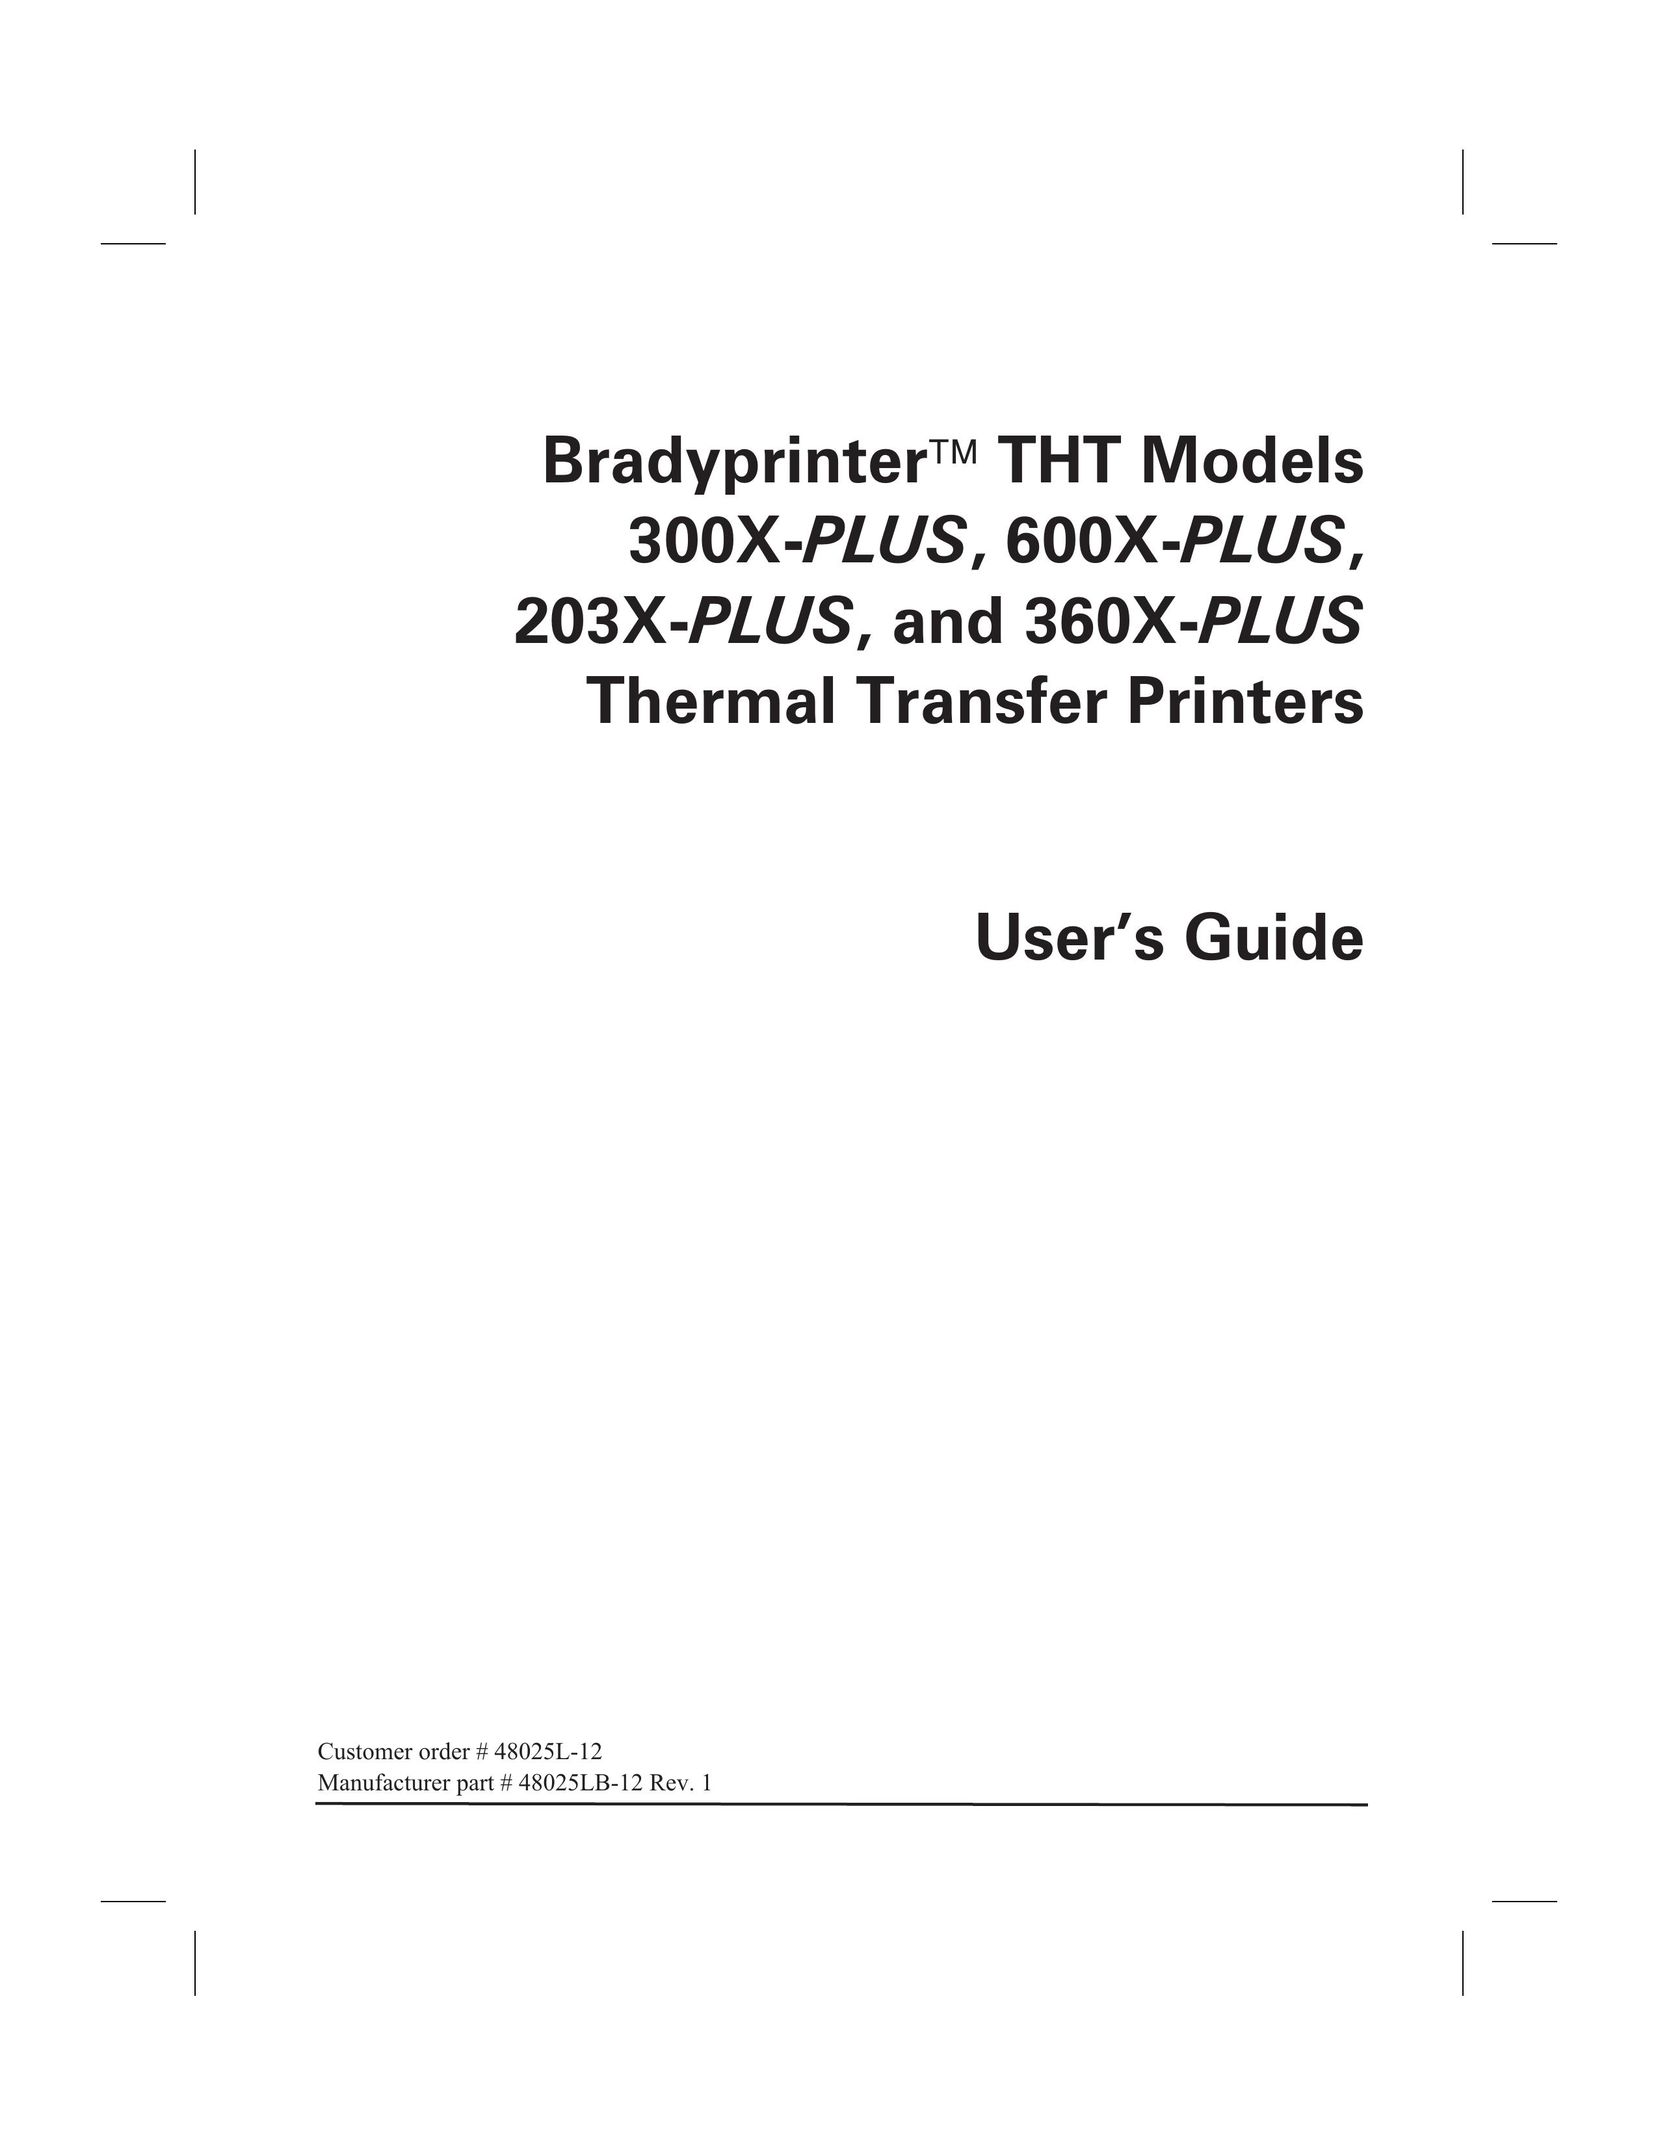 Brady 600X-PLUS Printer User Manual